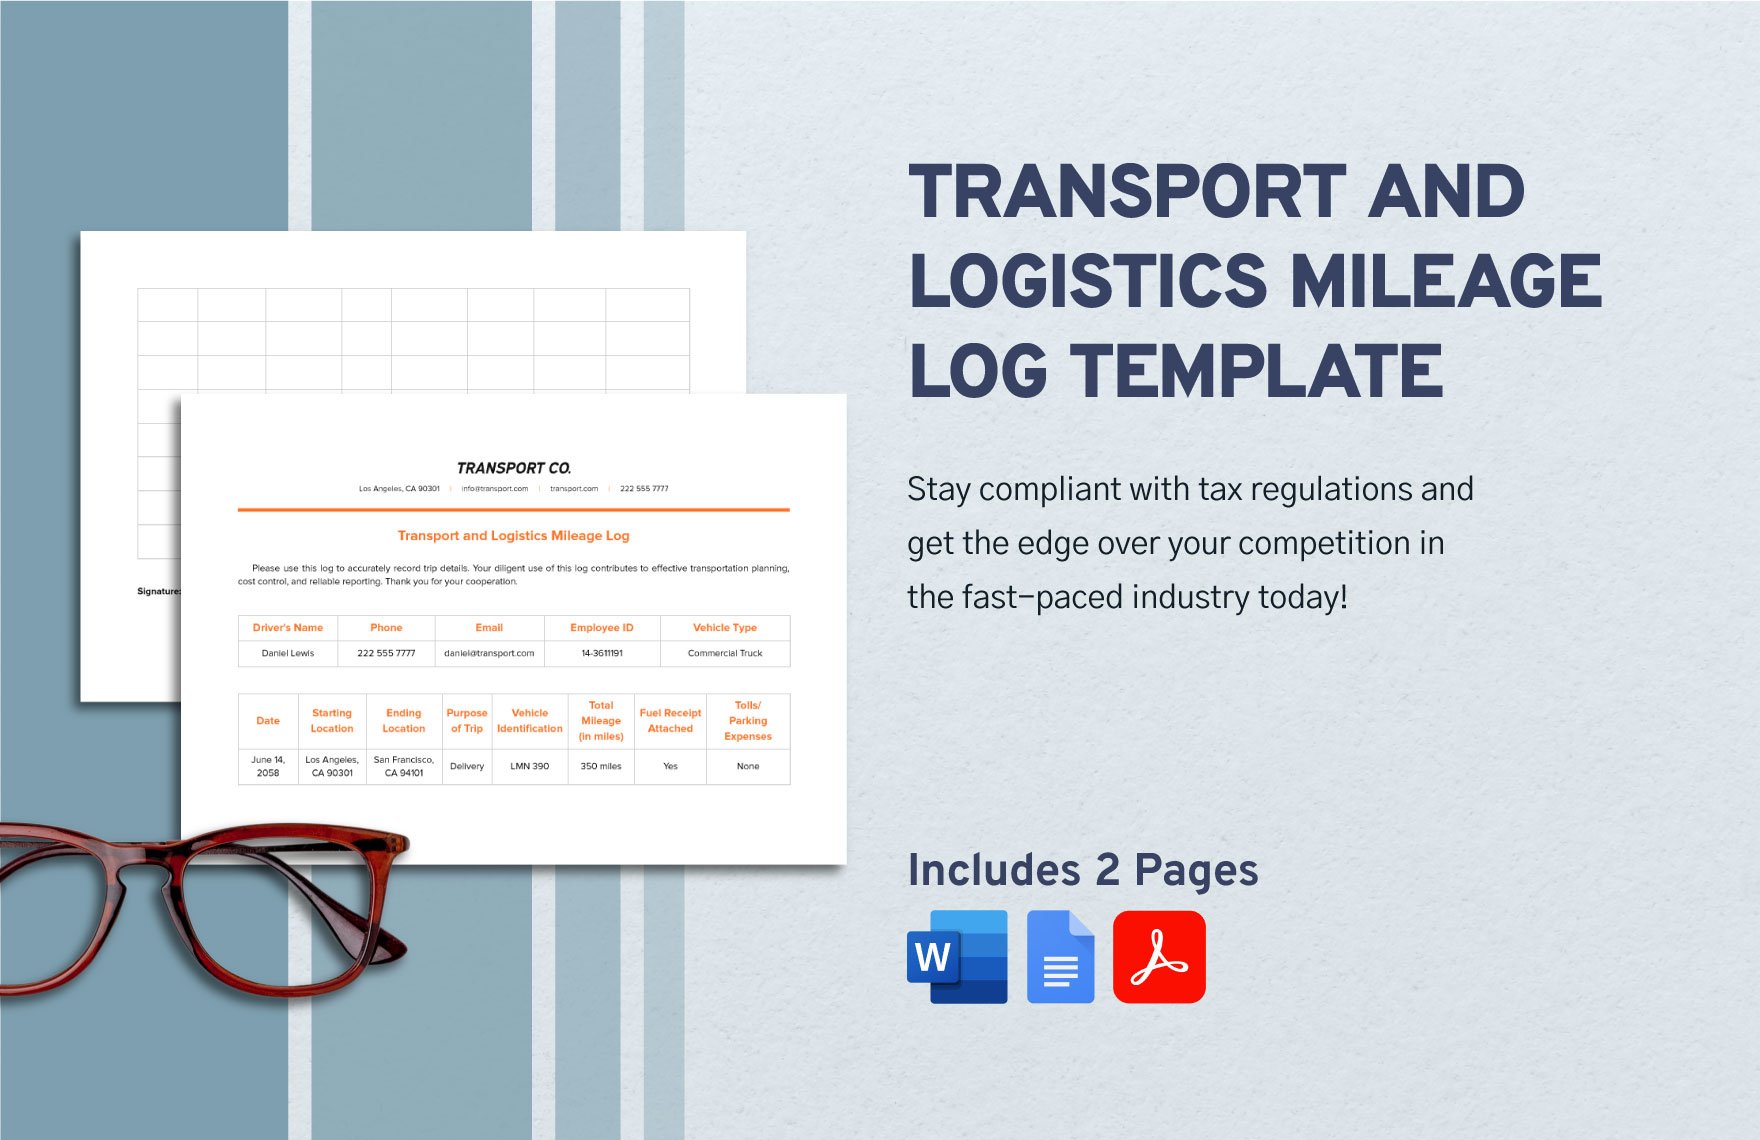 Transport and Logistics Mileage Log Template